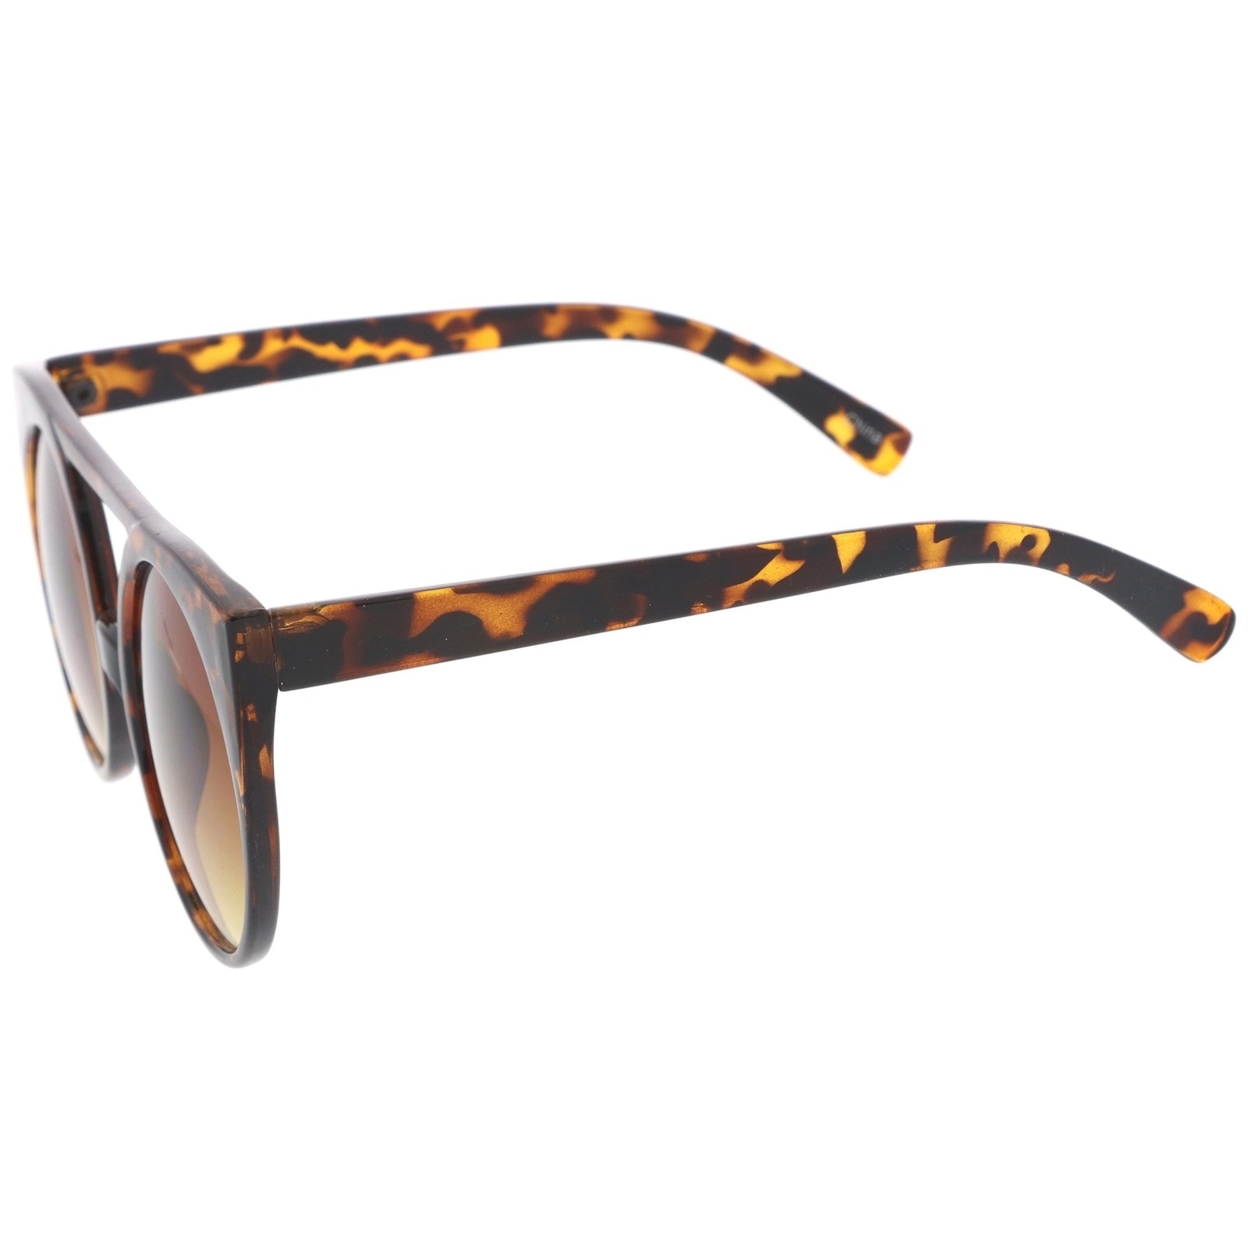 Women's Flat Top Cutout Round Lens Oversize Cat Eye Sunglasses 52mm - Clear / Lavender